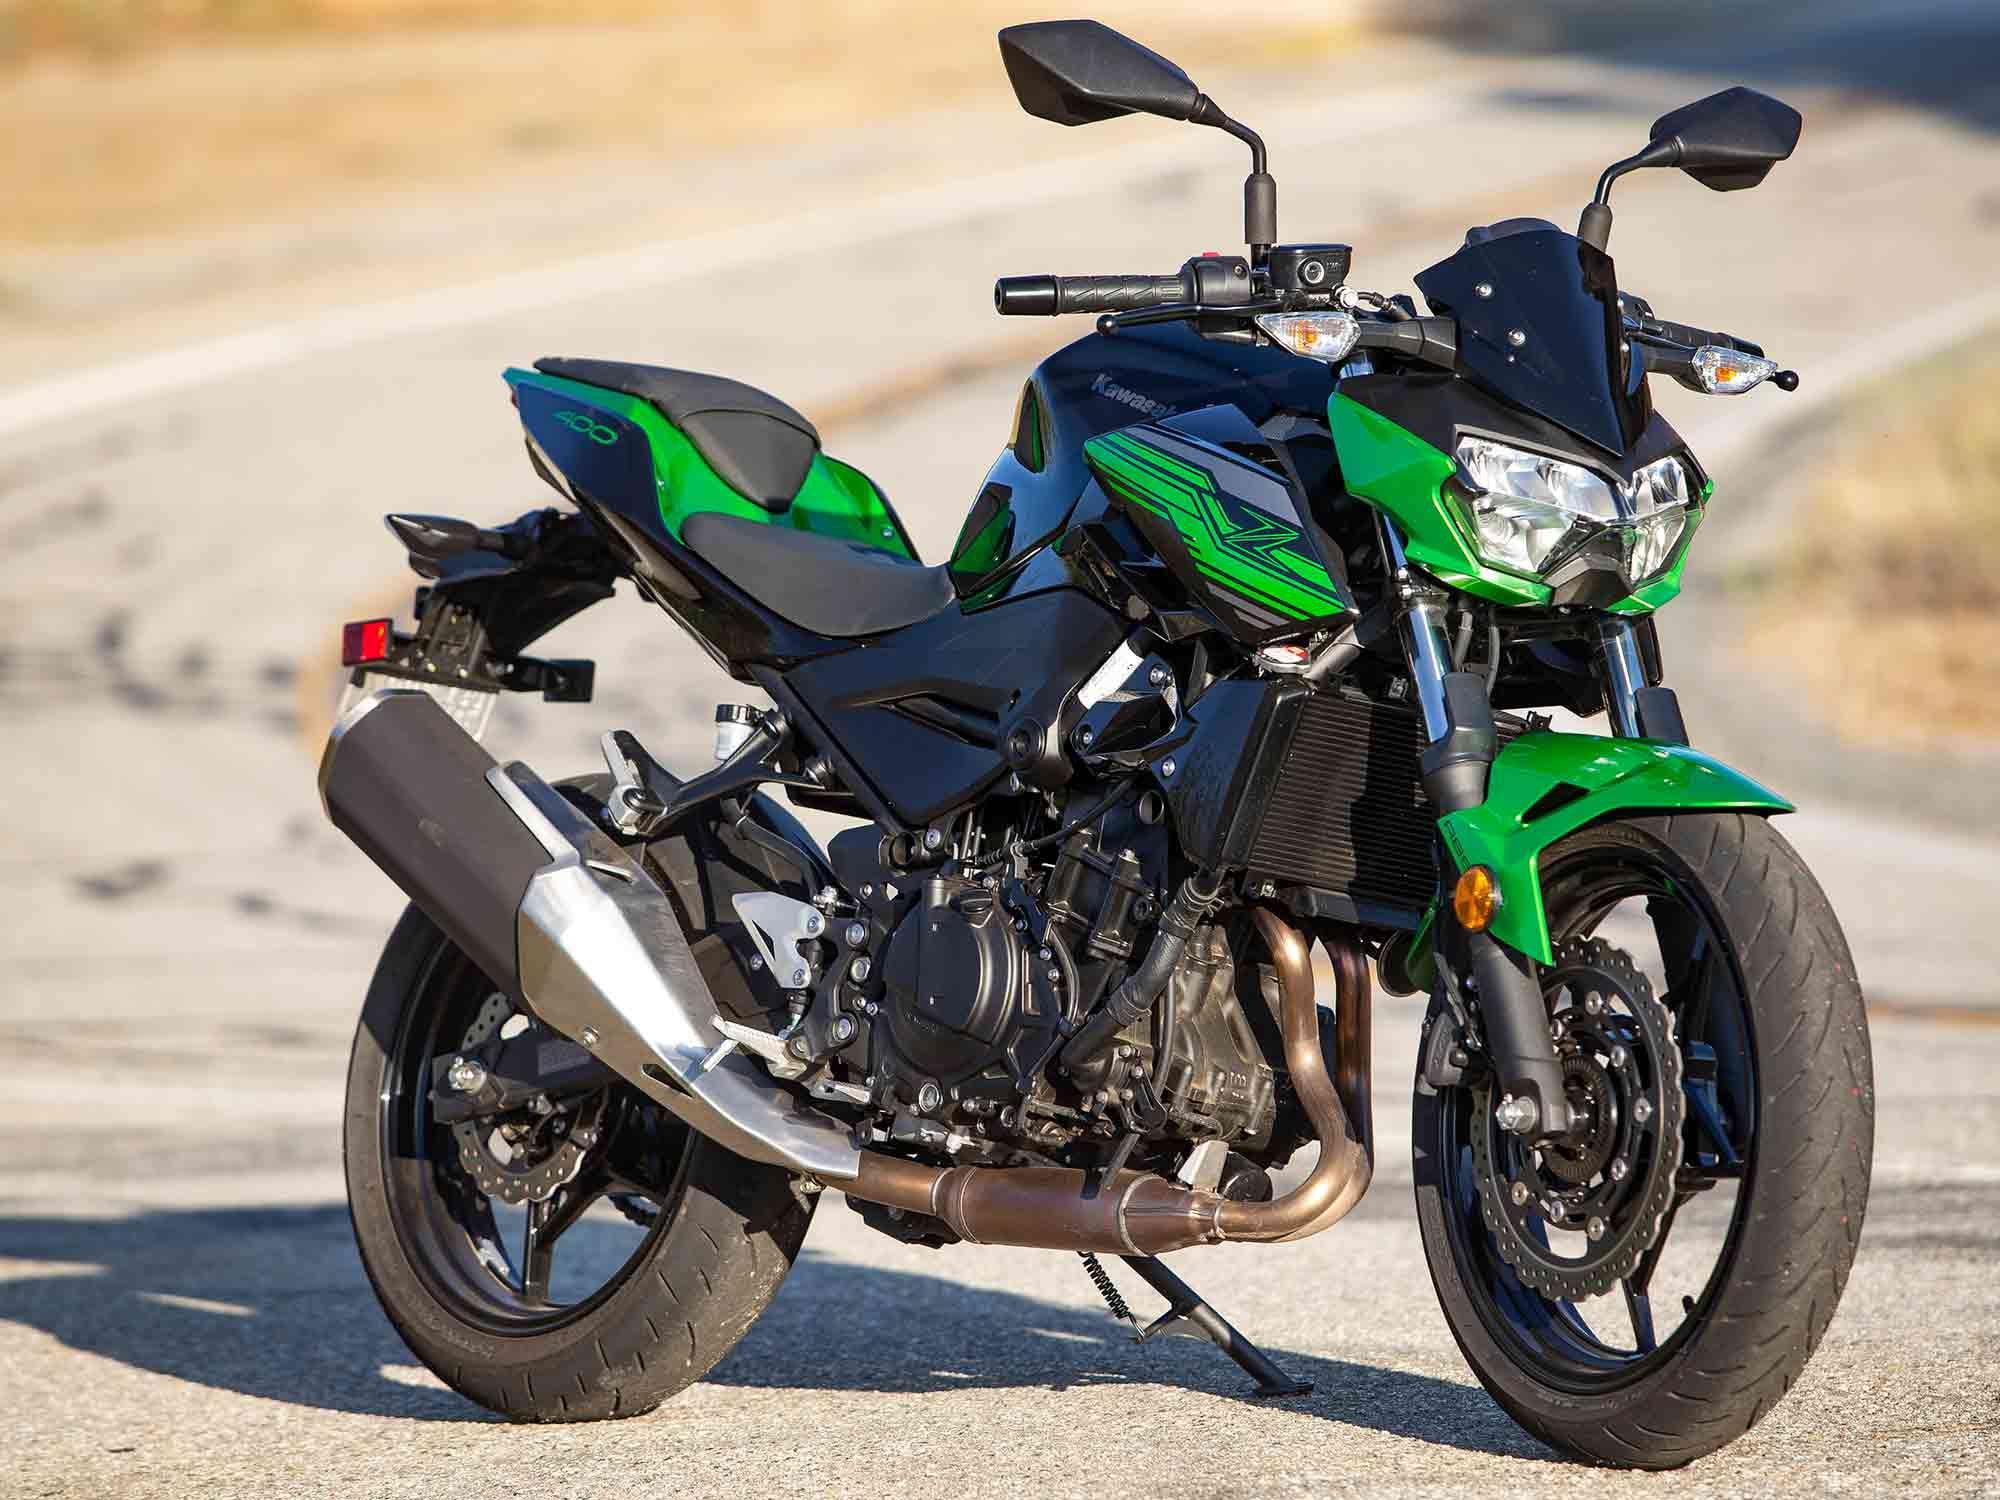 The Kawasaki Z400 is <em>Cycle World</em>’s Best Lightweight Streetbike for 2020.